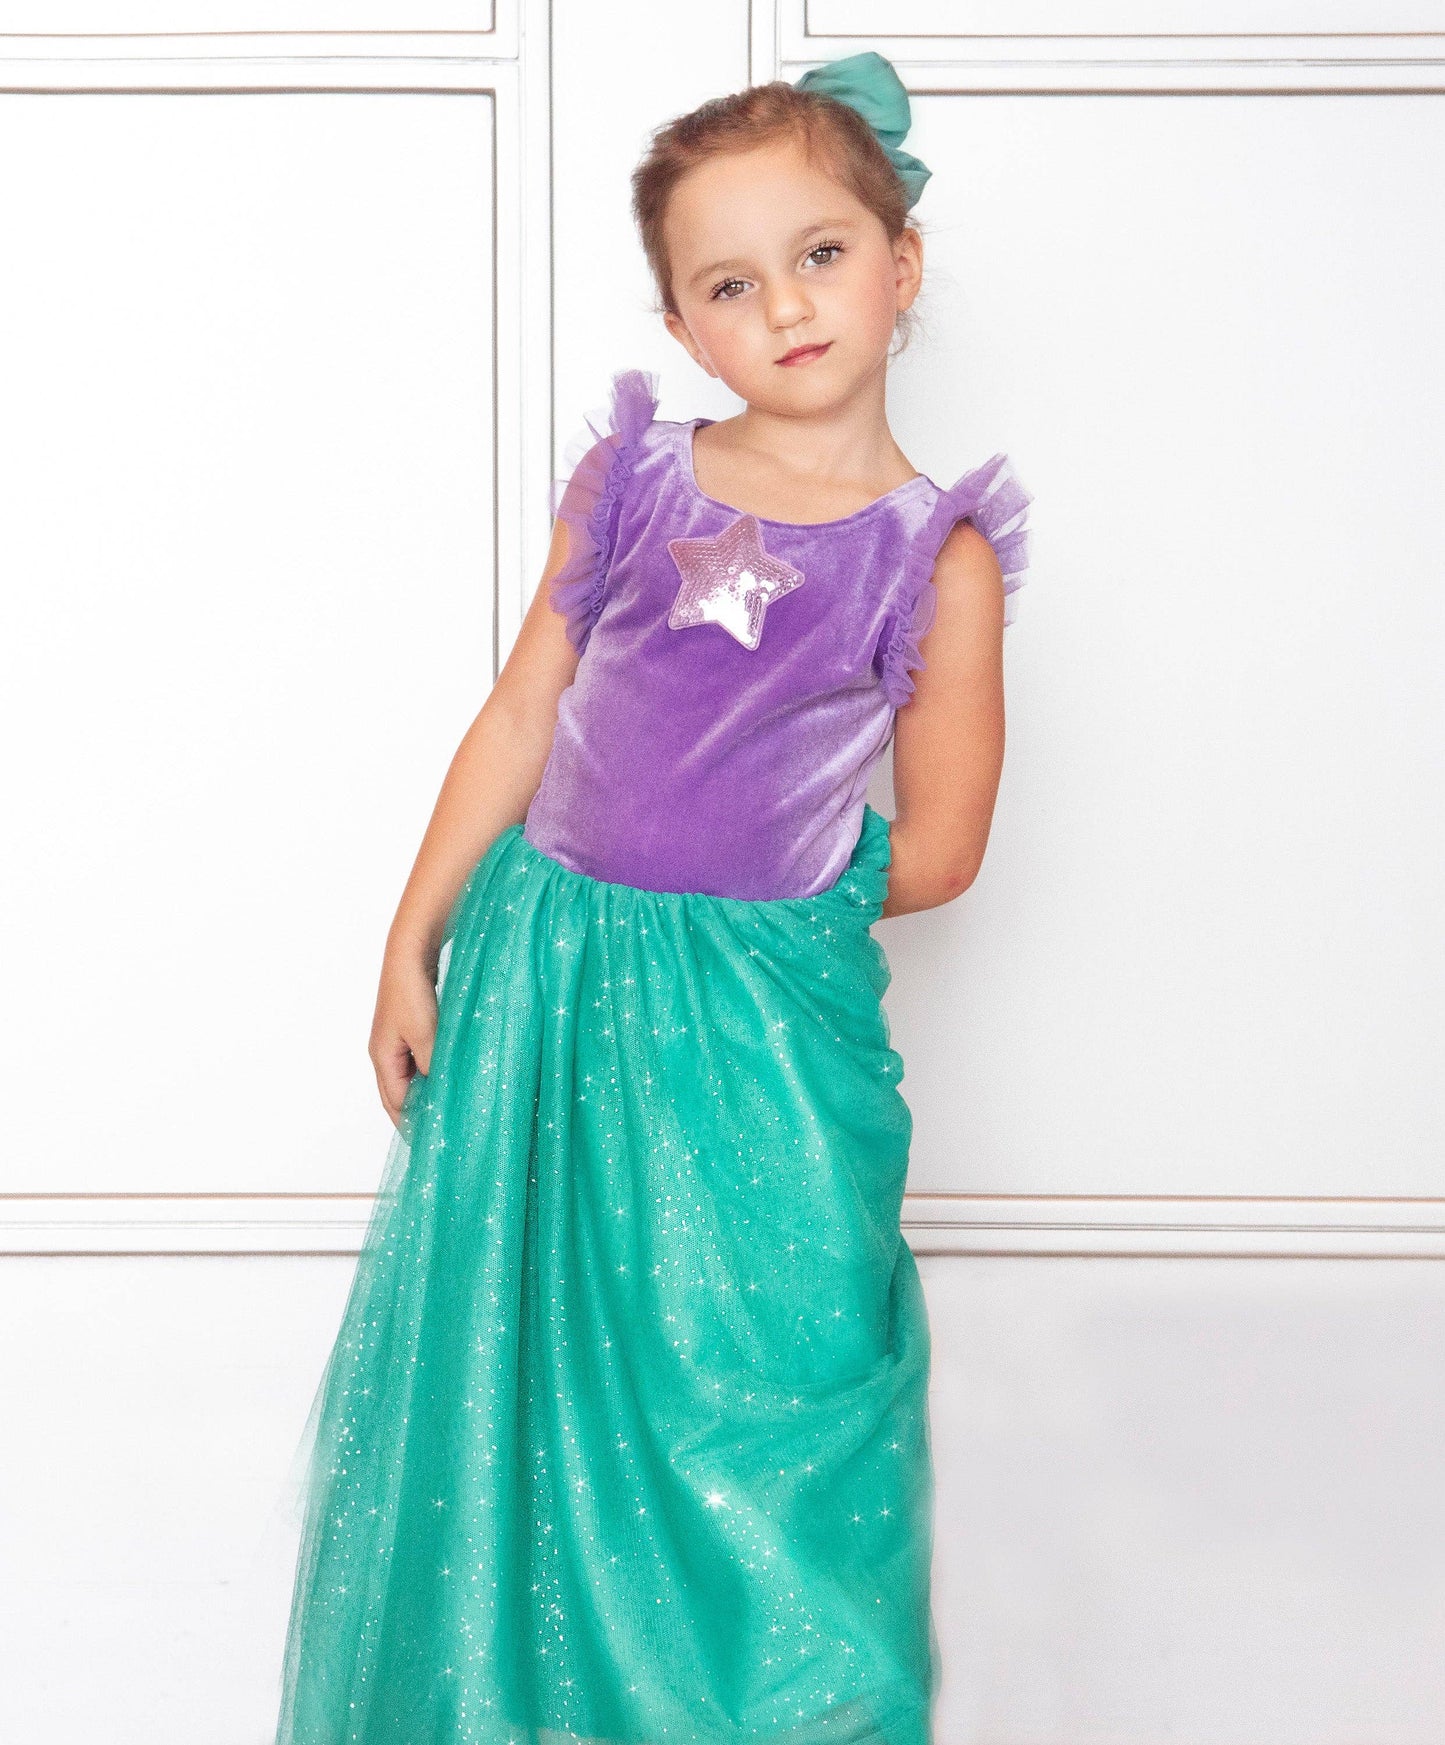 Mermaid Princess Costume Dress (S) 4-5 years